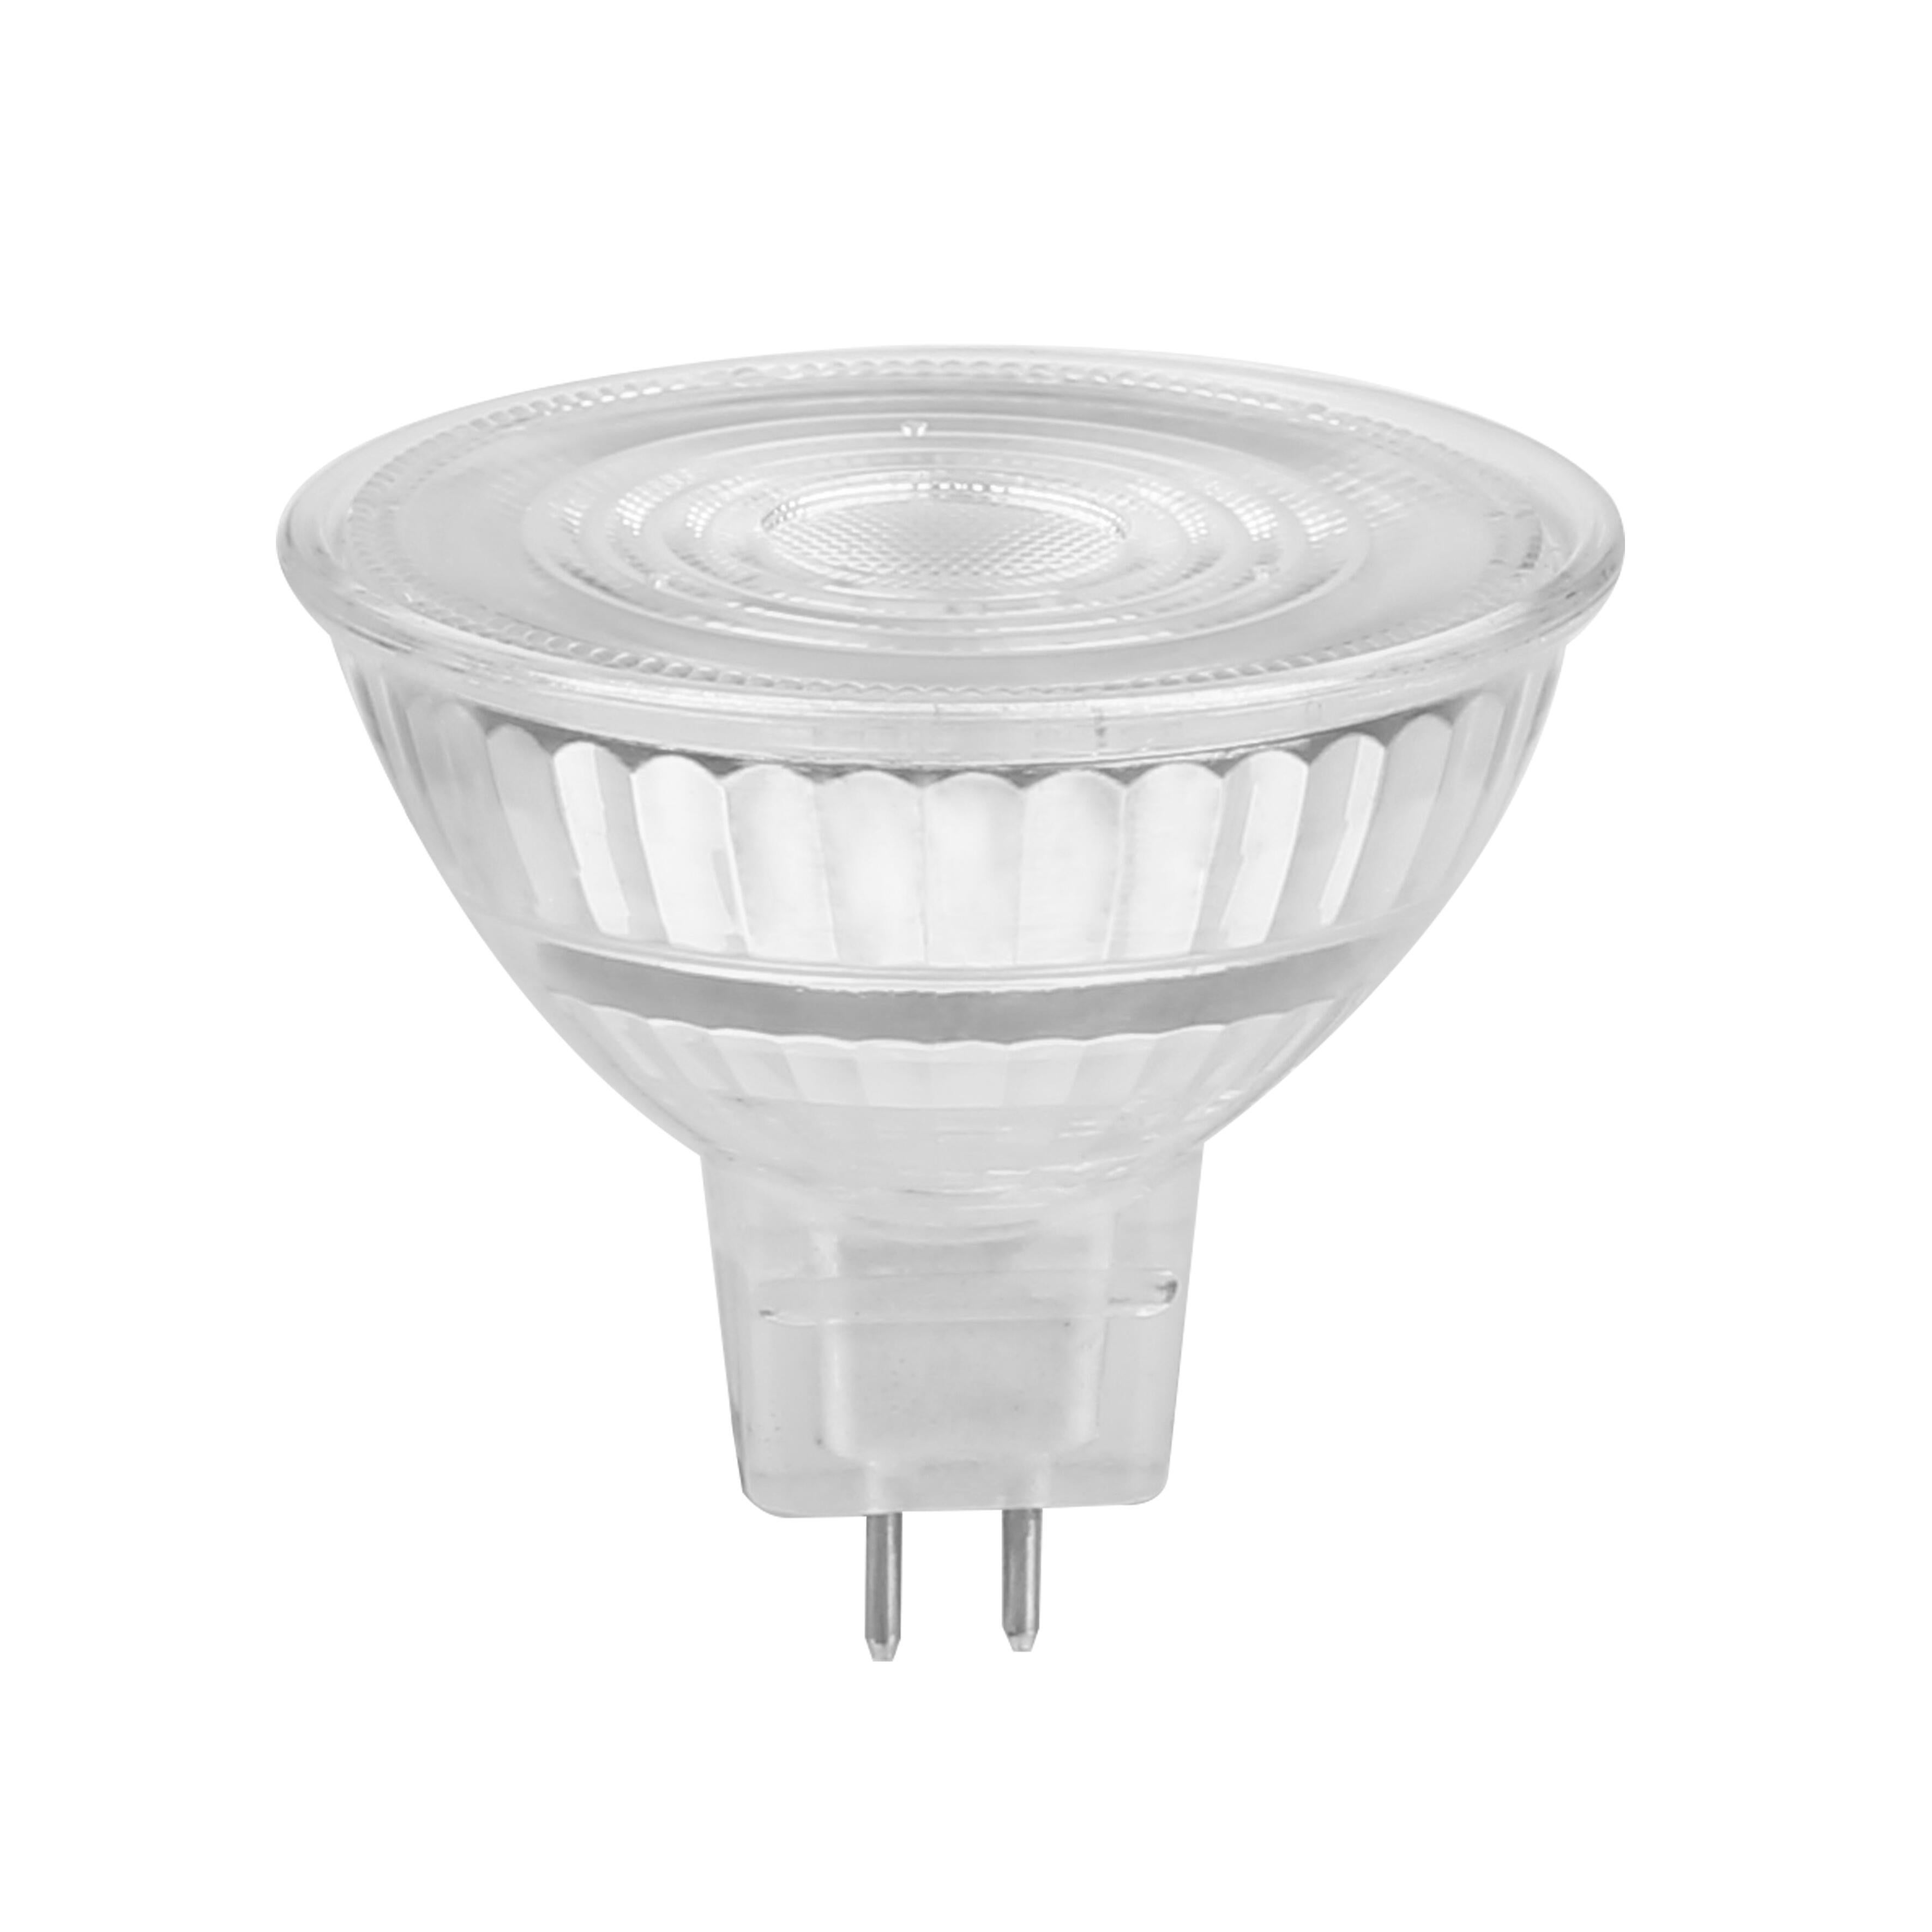 Ampoule LED 230V GU10 6w conso 420 lumens 6000k Blanc froid